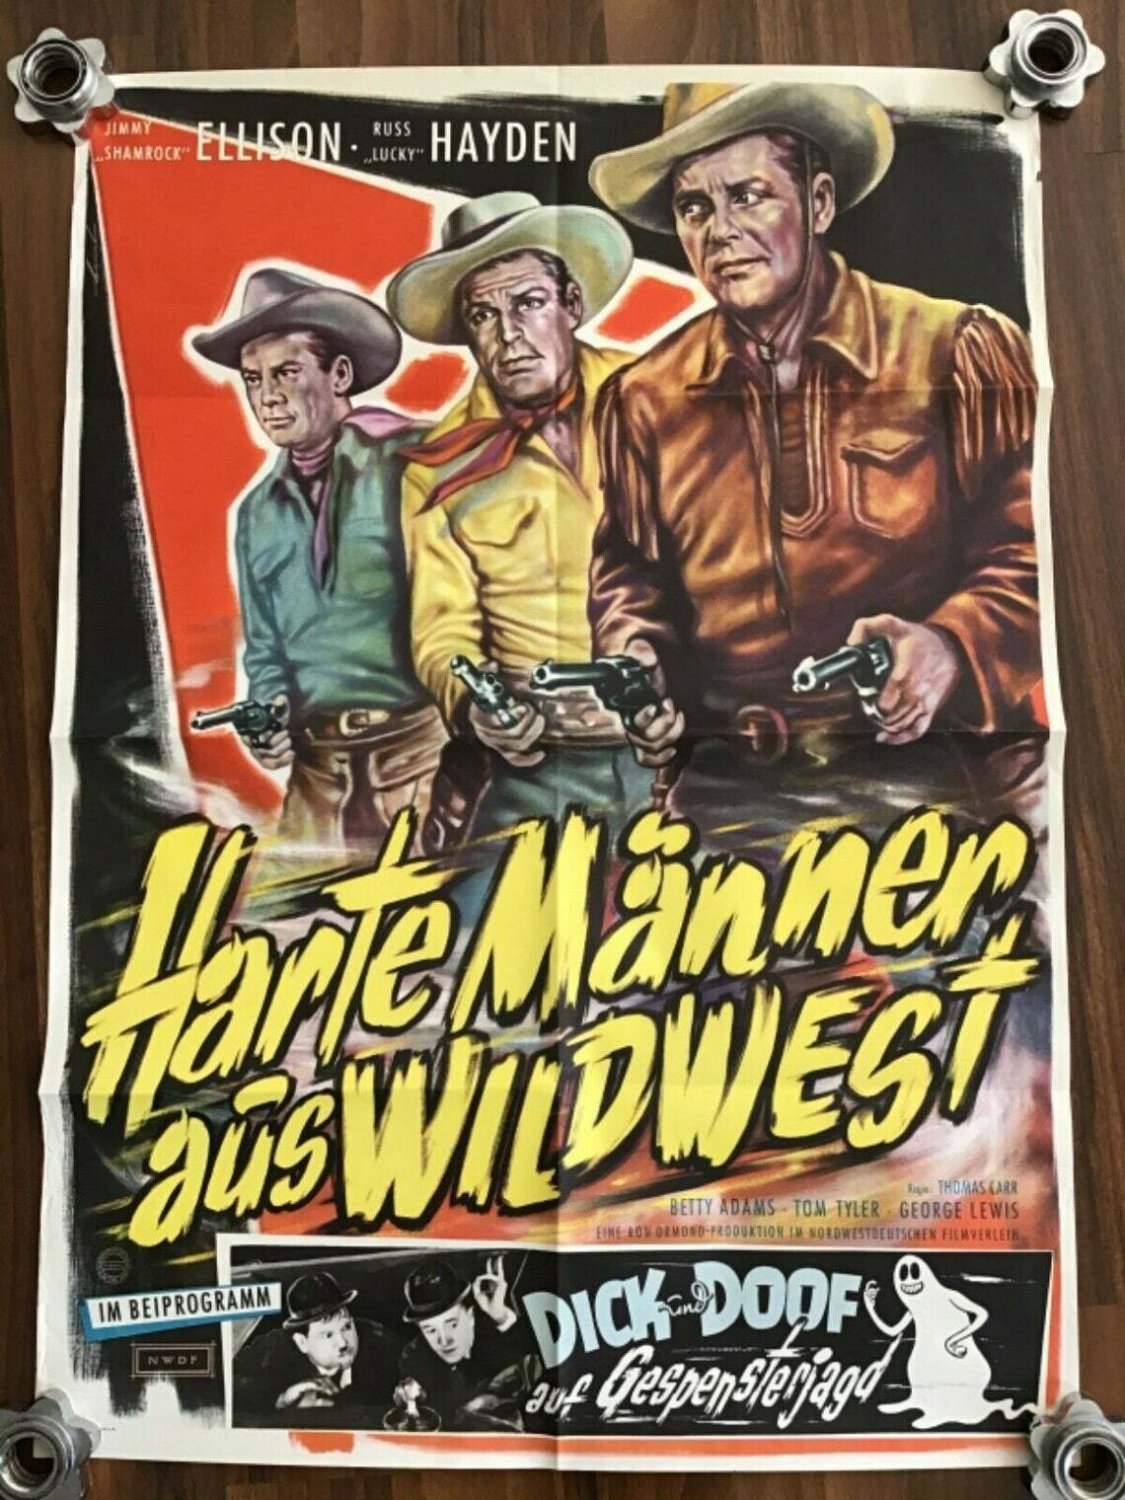 Hostile Country, Jimmy Ellison,Cinema Poster 1958